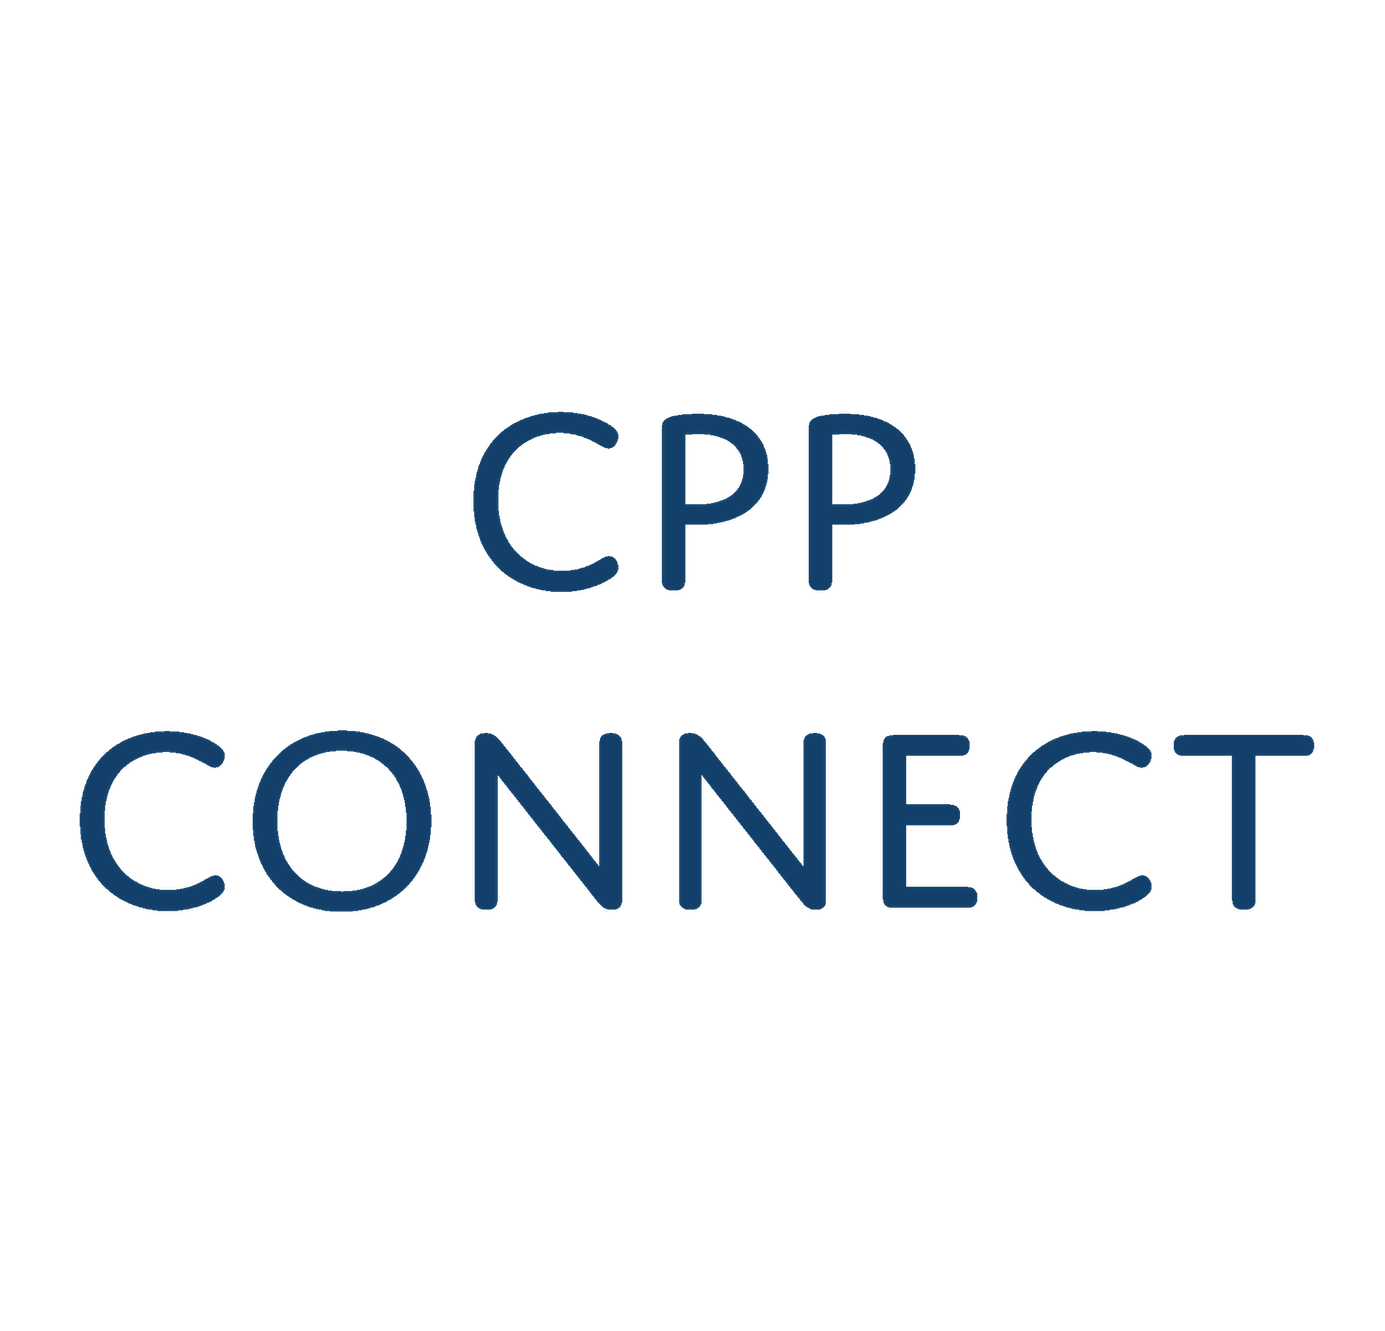 CPP Connect logo